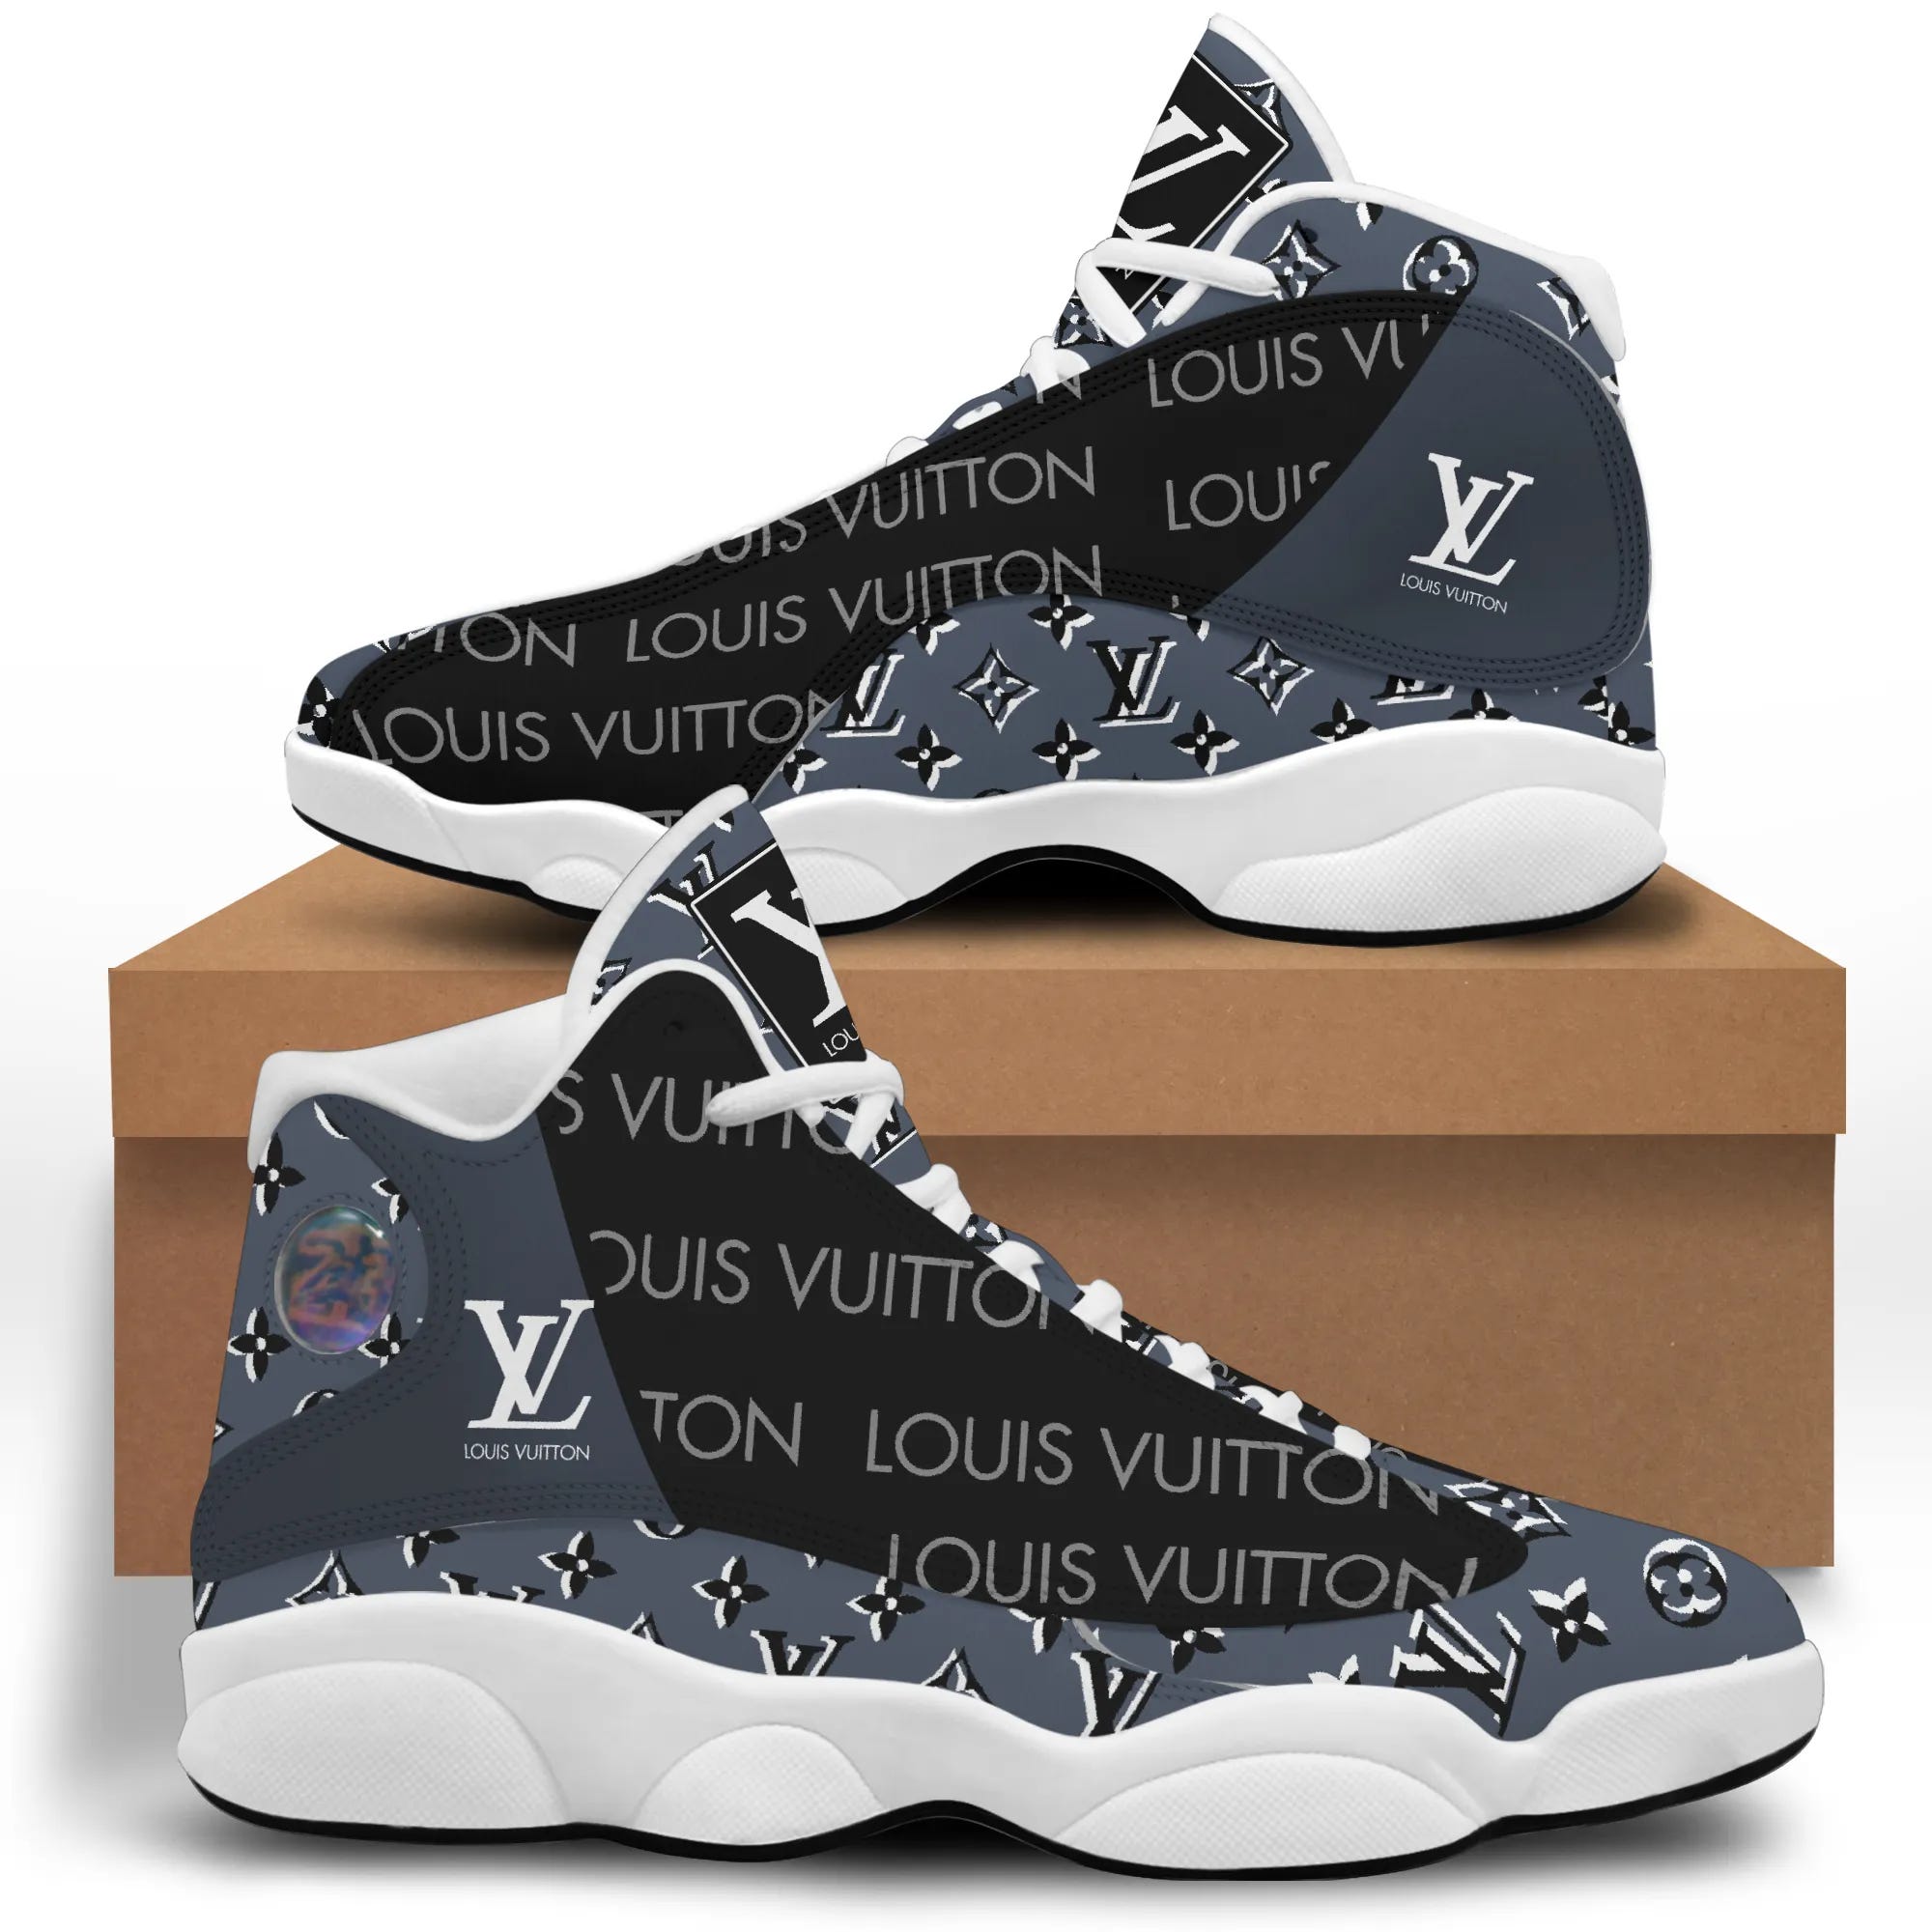 Louis Vuitton Lv Black Grey Air Jordan 13 Sneakers Shoes Gifts For Men  Women-155714 - Cootie Shop - Medium